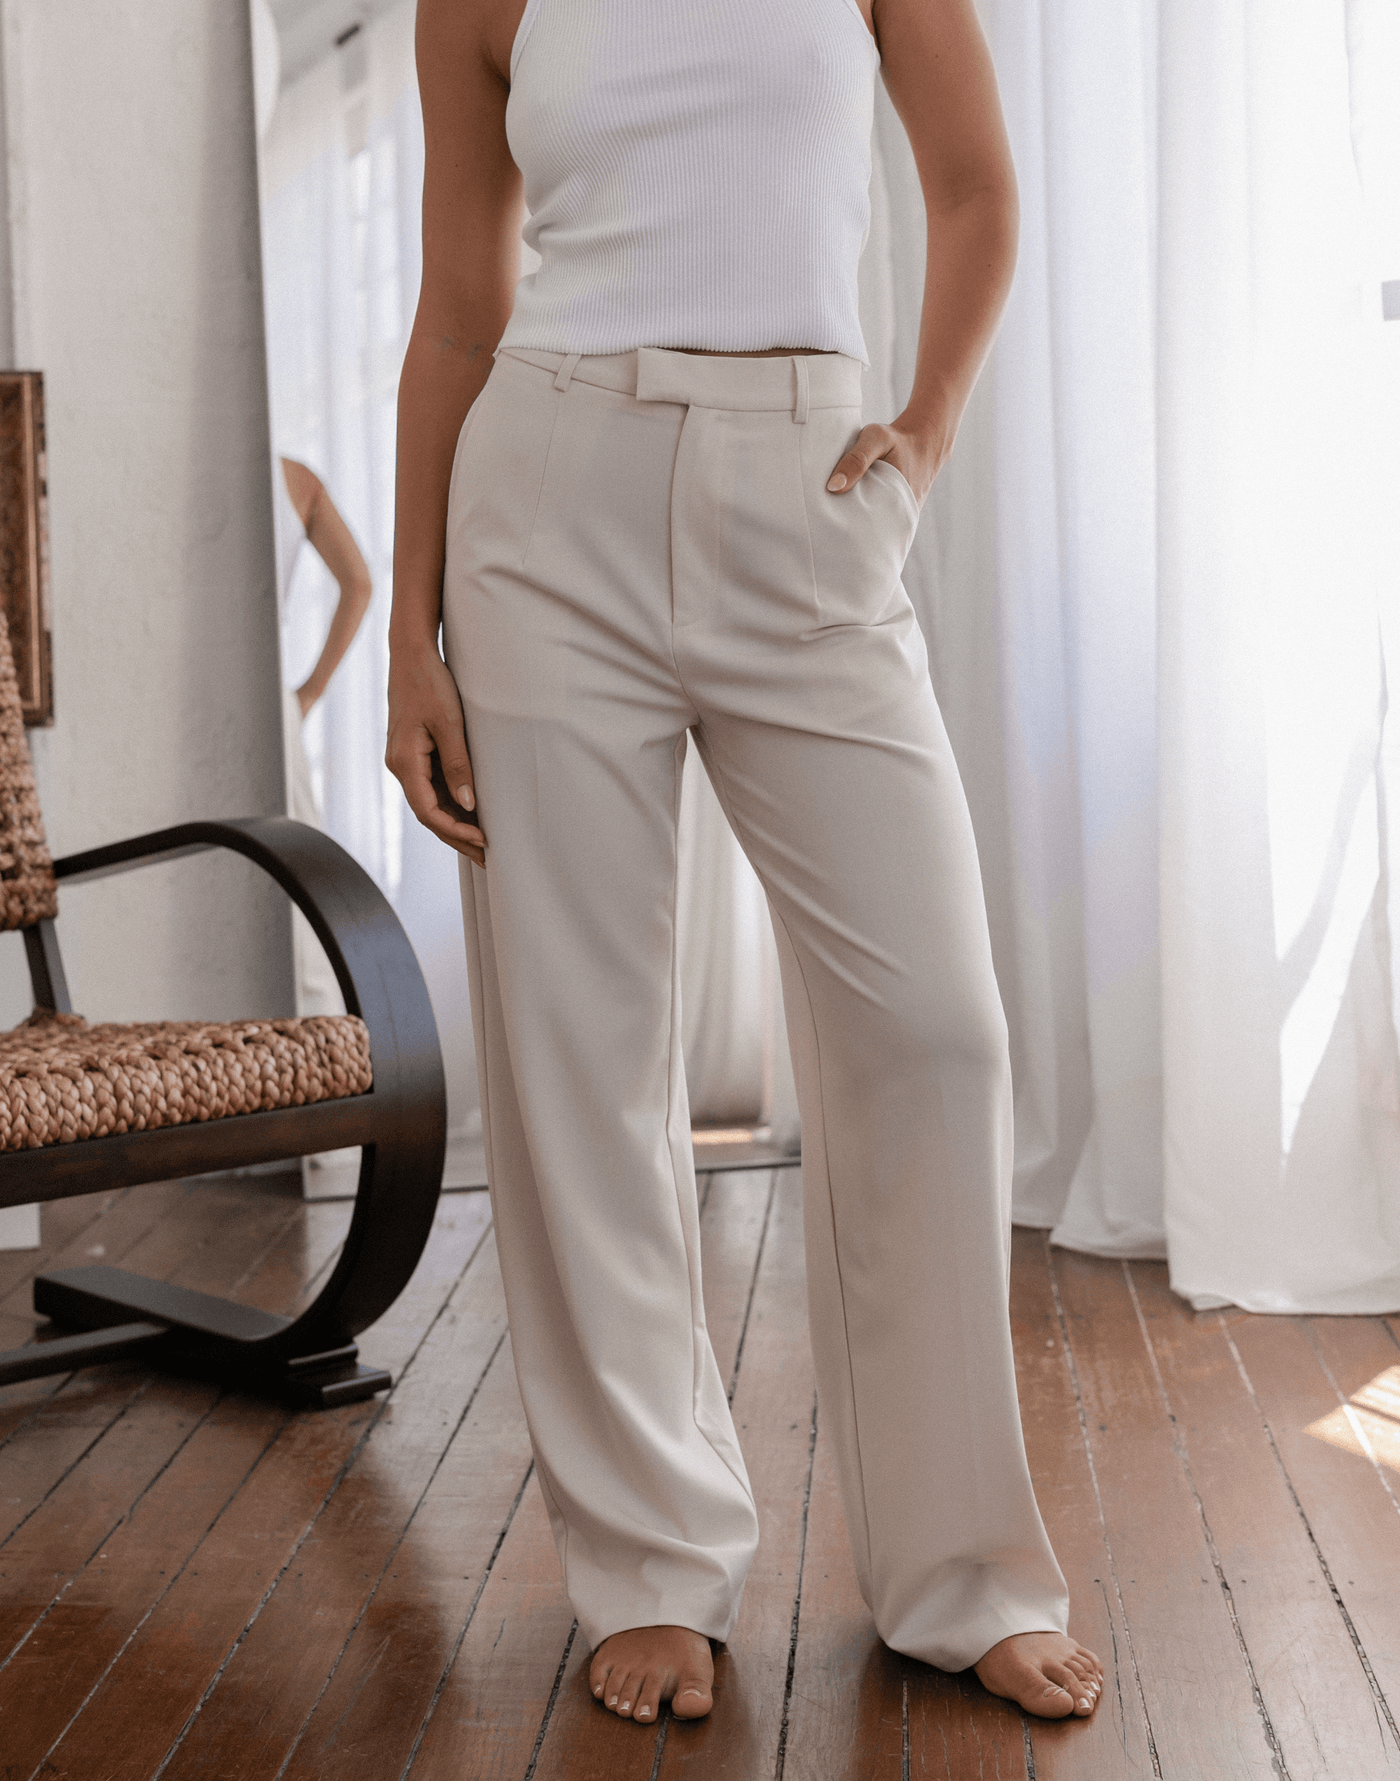 Dawnson Pants (Cream) - High Waisted Business Pants - Women's Pants - Charcoal Clothing